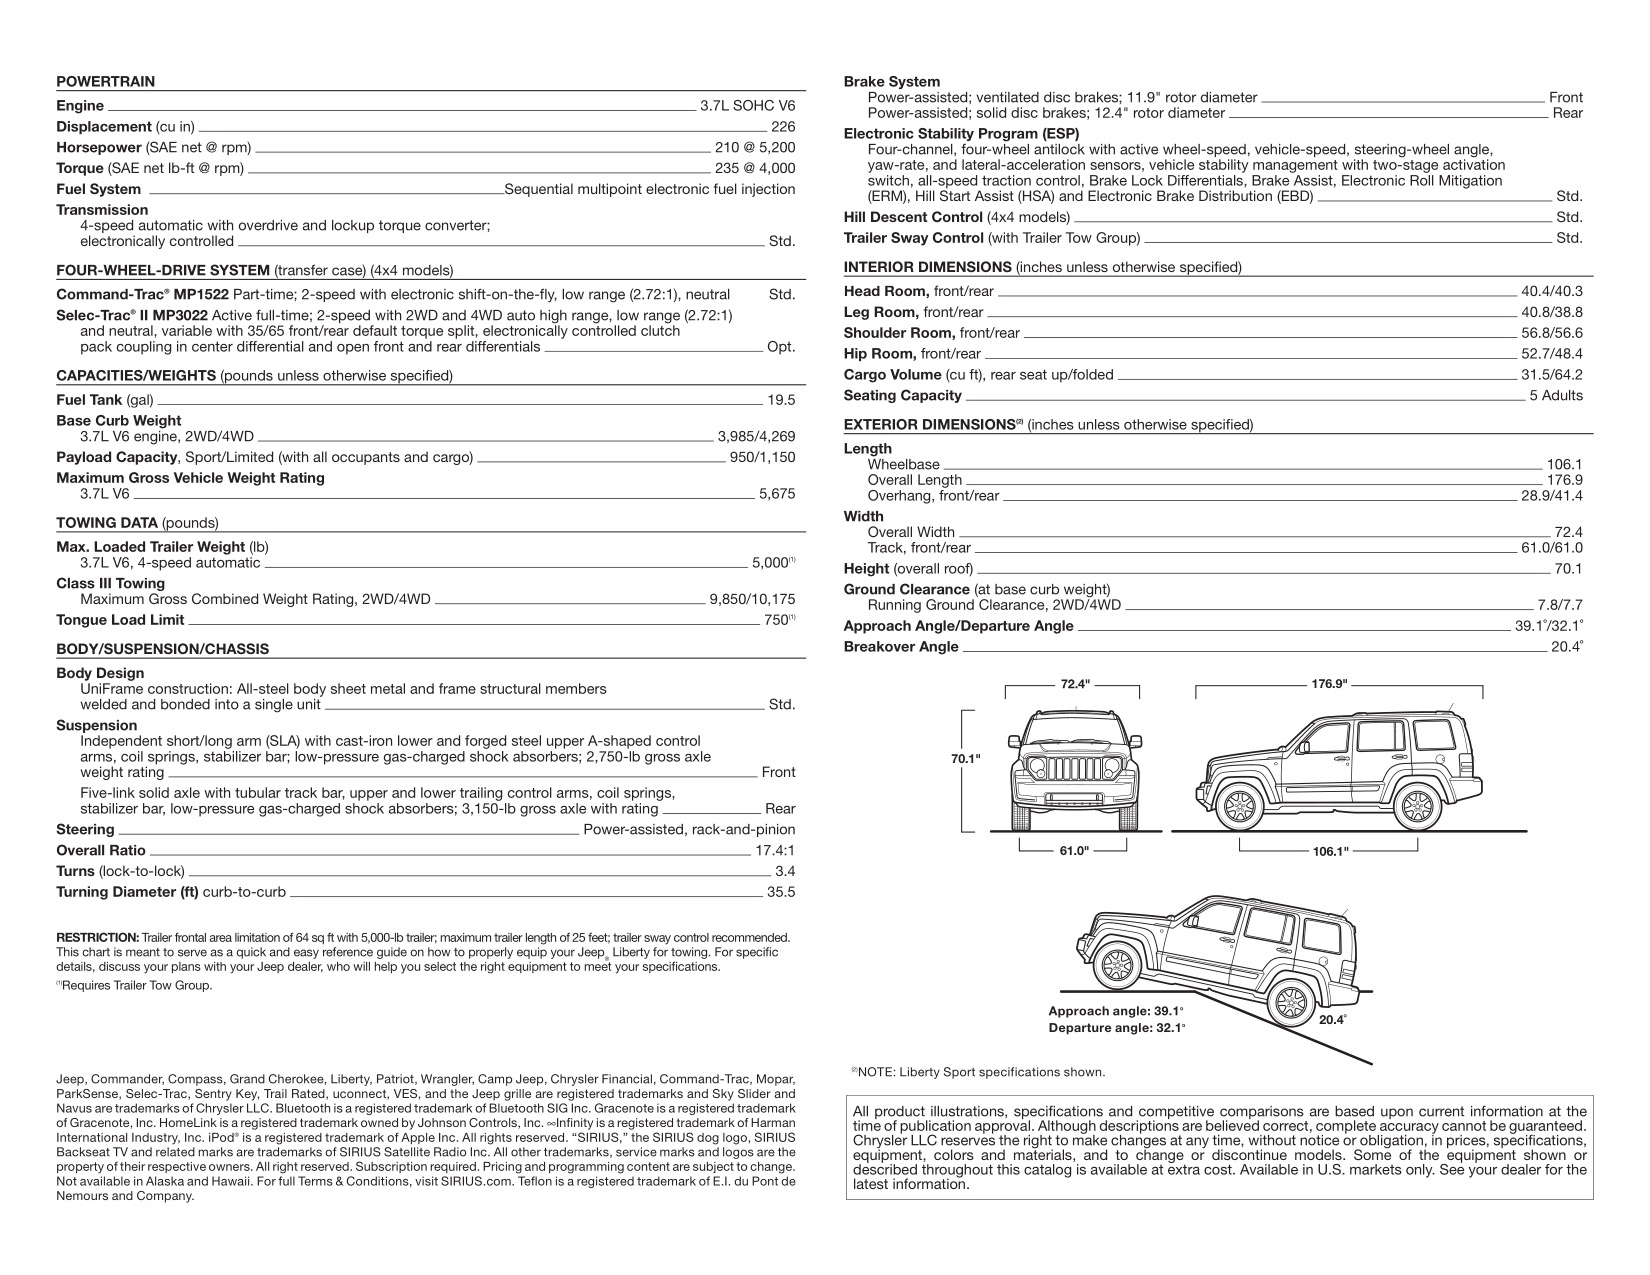 2009 Jeep Liberty Brochure Page 21